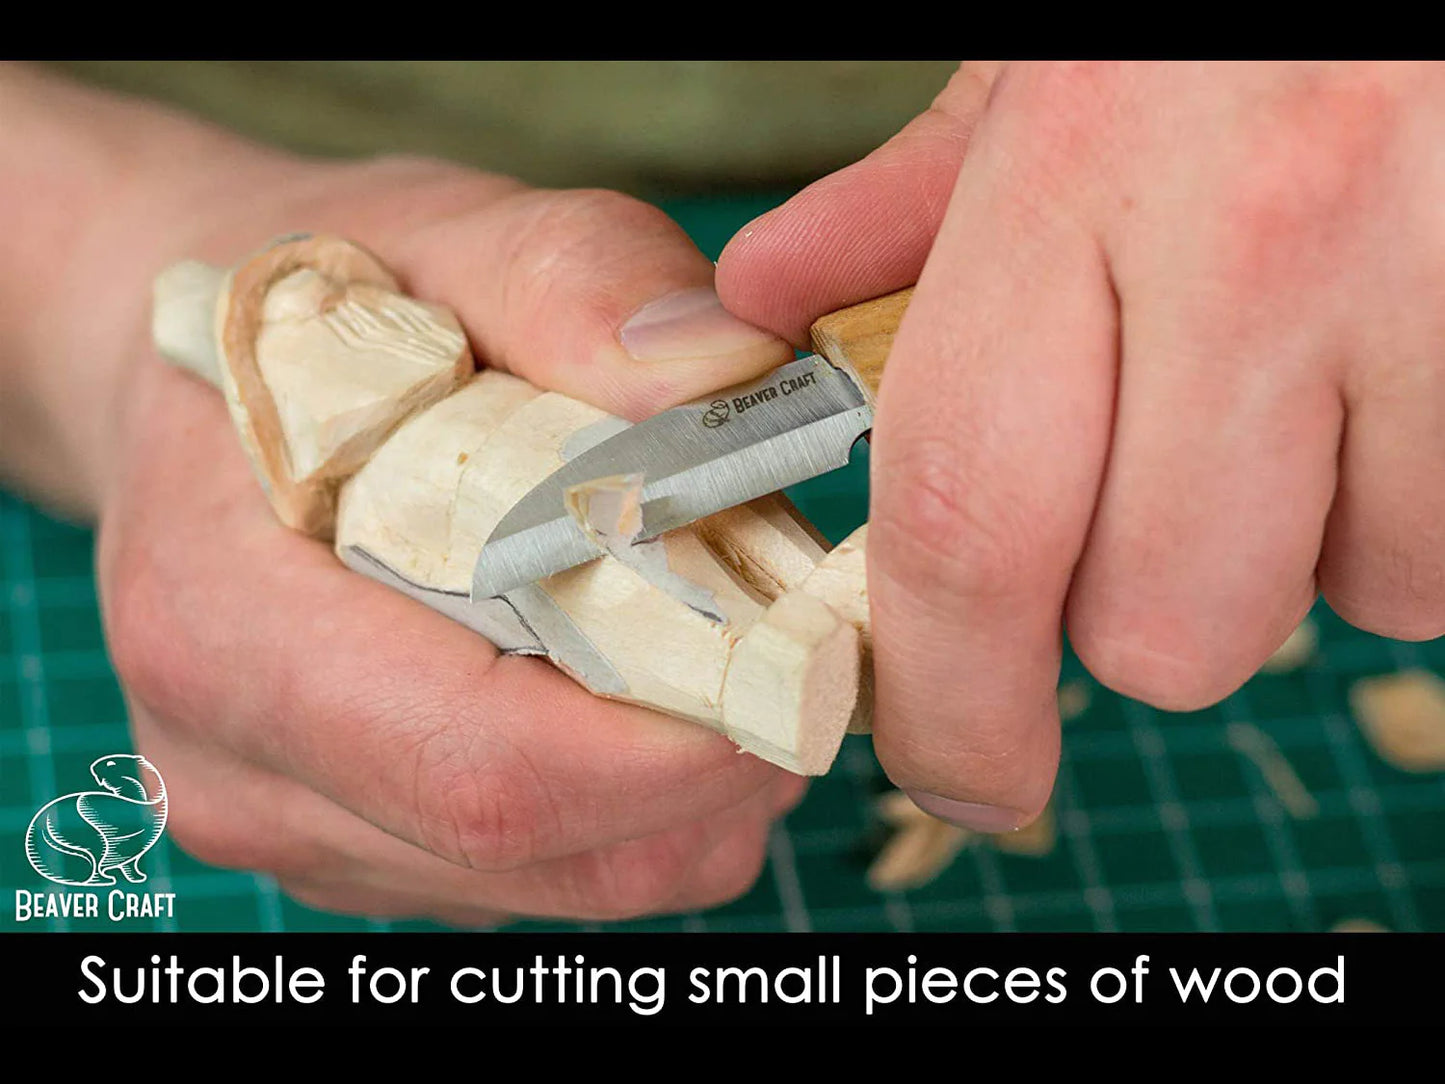 BeaverCraft C2 Wood Working Carving Bench Knife